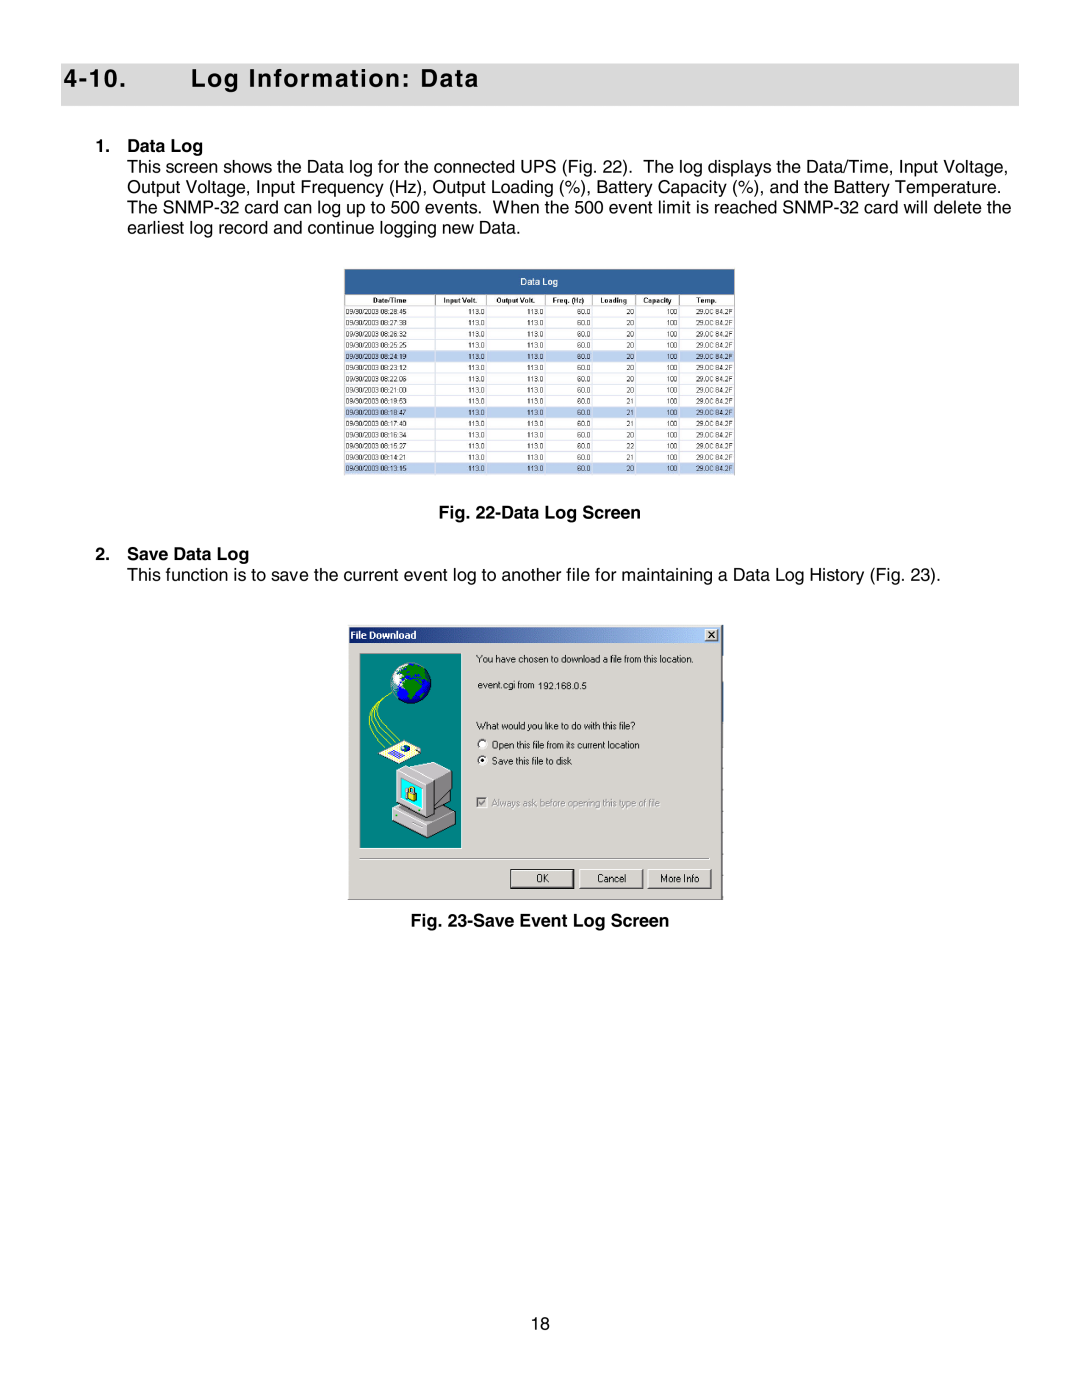 Minuteman UPS SNMP-32 Series user manual Log Information Data, Data Log Screen 2. Save Data Log, Save Event Log Screen 